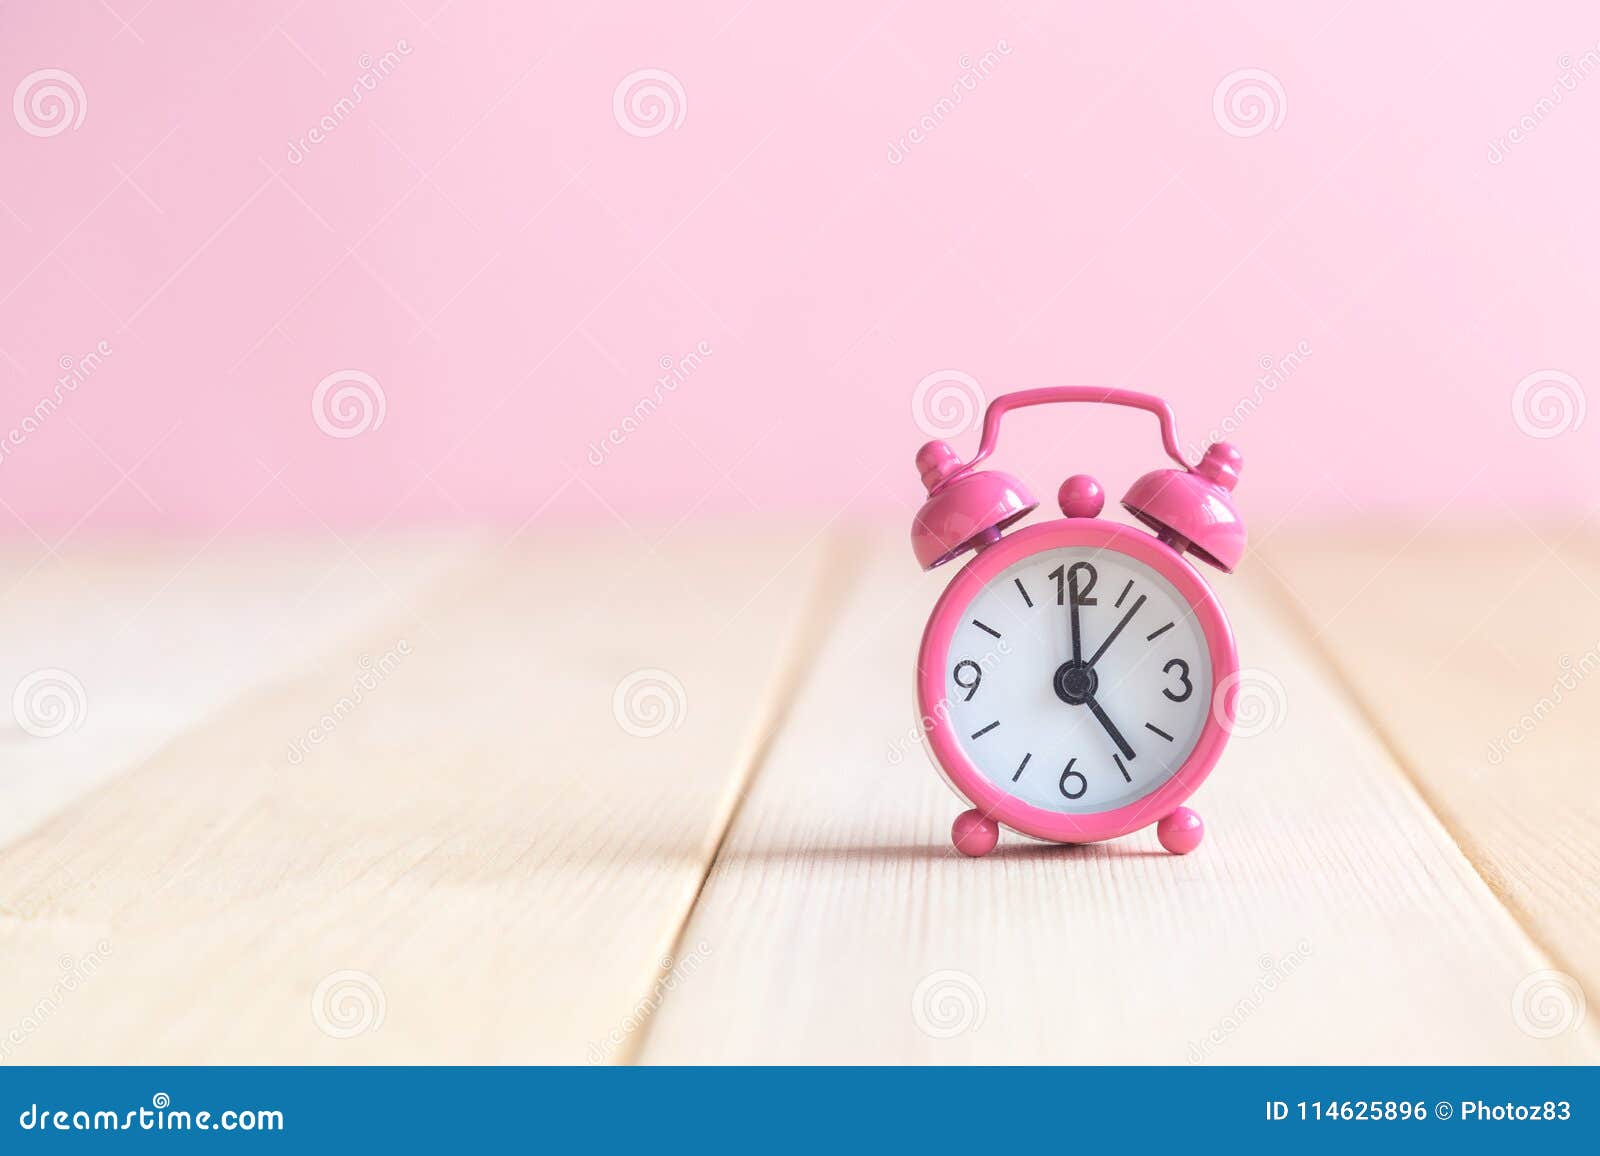 Close Up Of Alarm Clock On Desk Against Pastel Pink Background